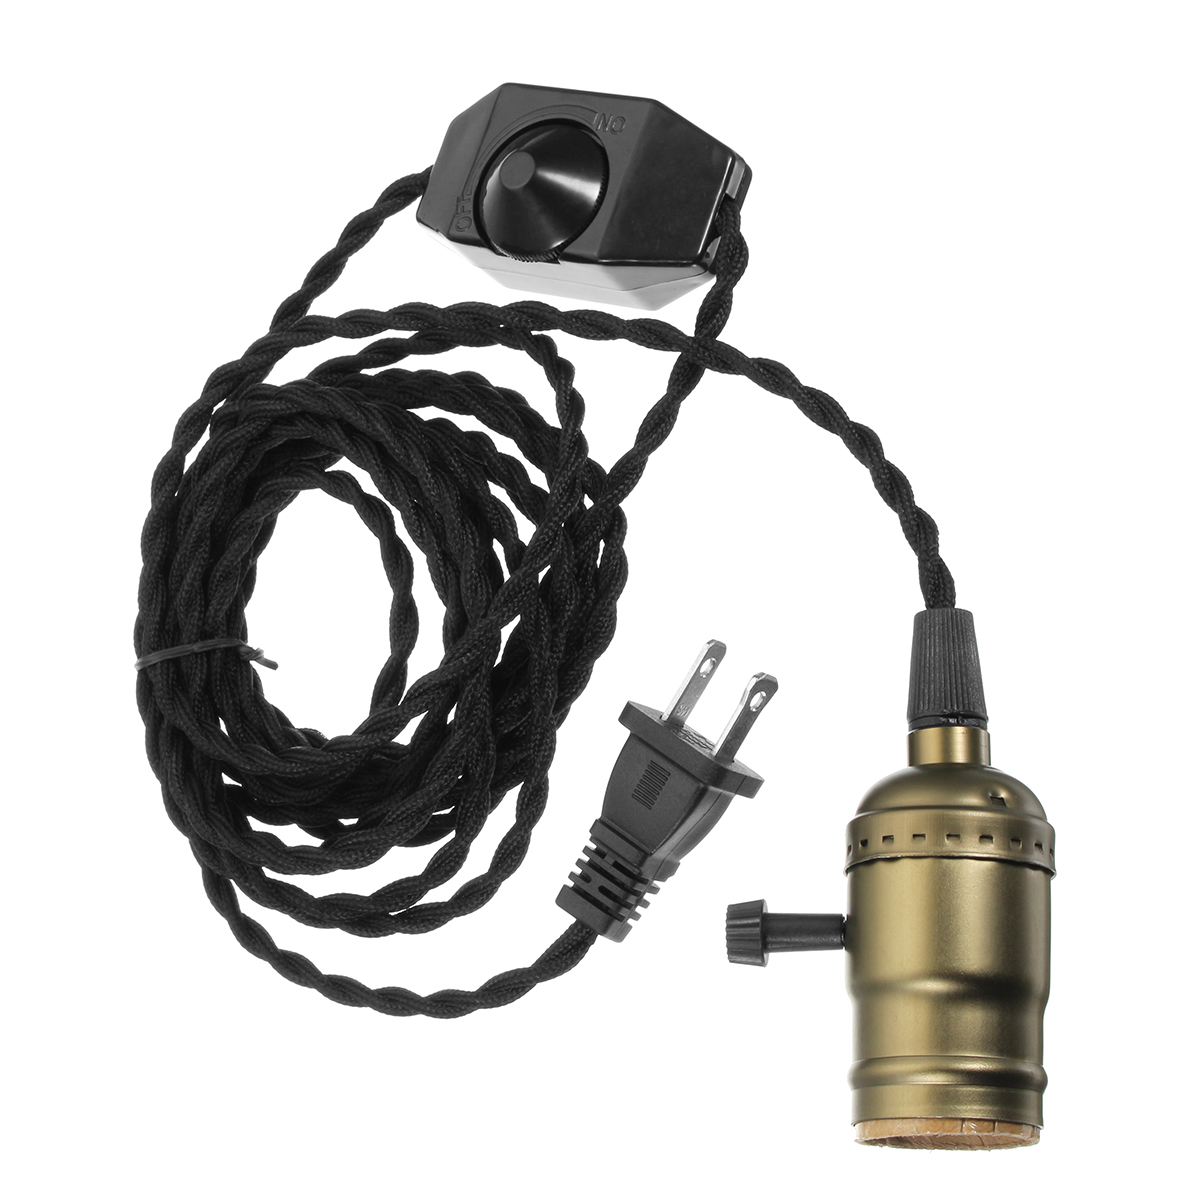 E27-4M-Vintage-Copper-Bulb-Adapter-Base-Socket-Lamp-Holder-with-Dimmer-Switch-US-Plug-1287282-2